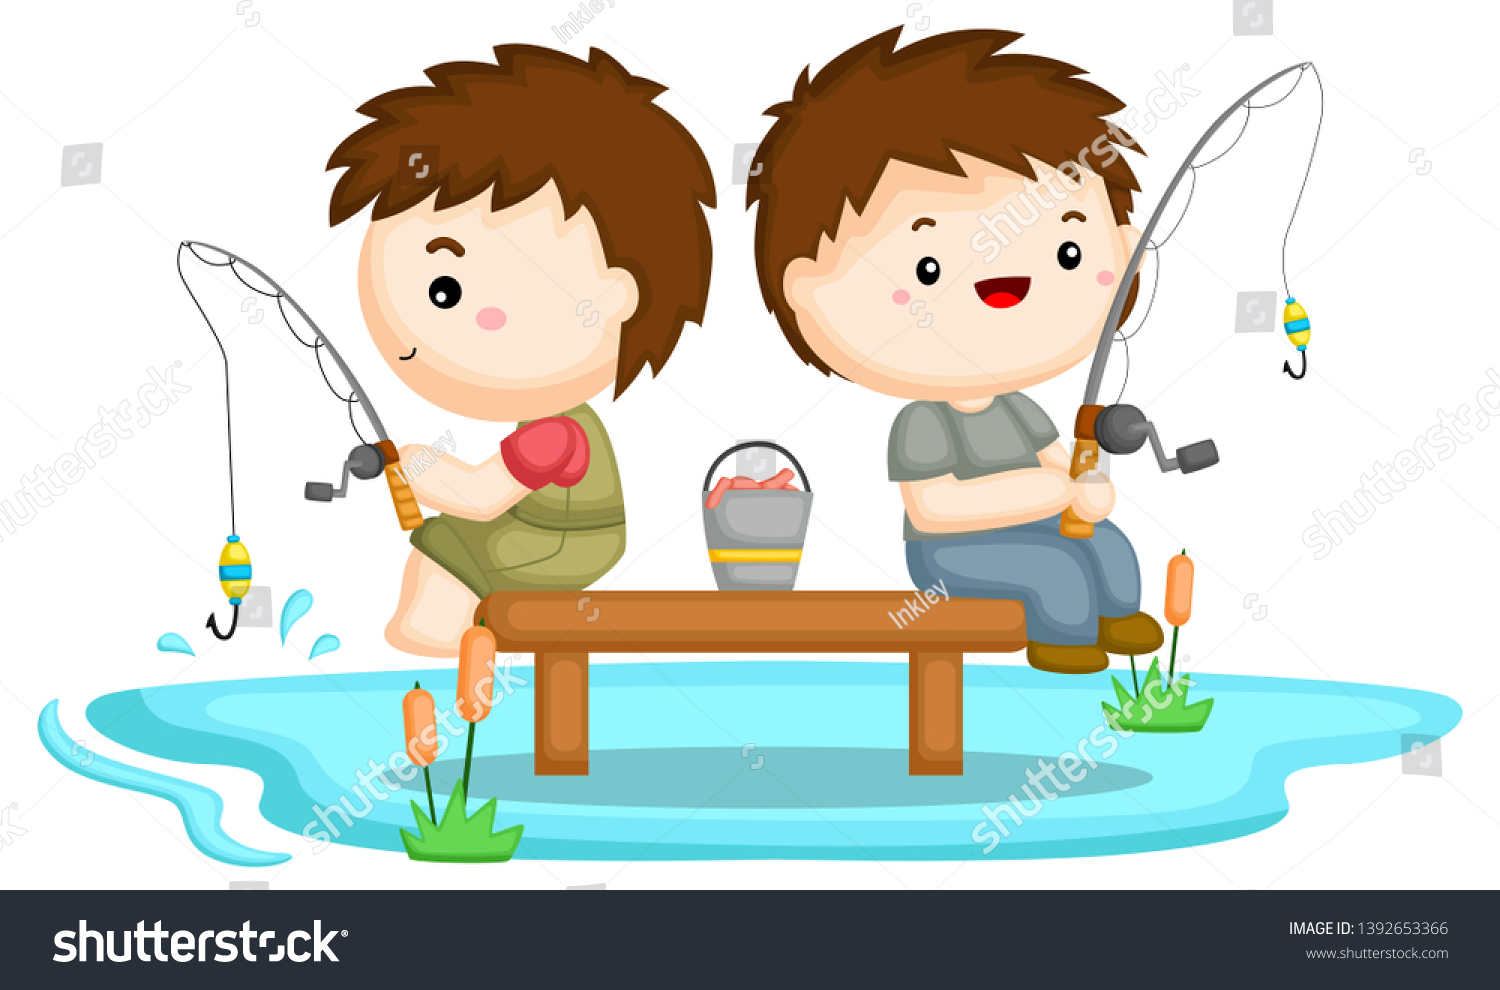 Два темных мальчика ловят рыбу